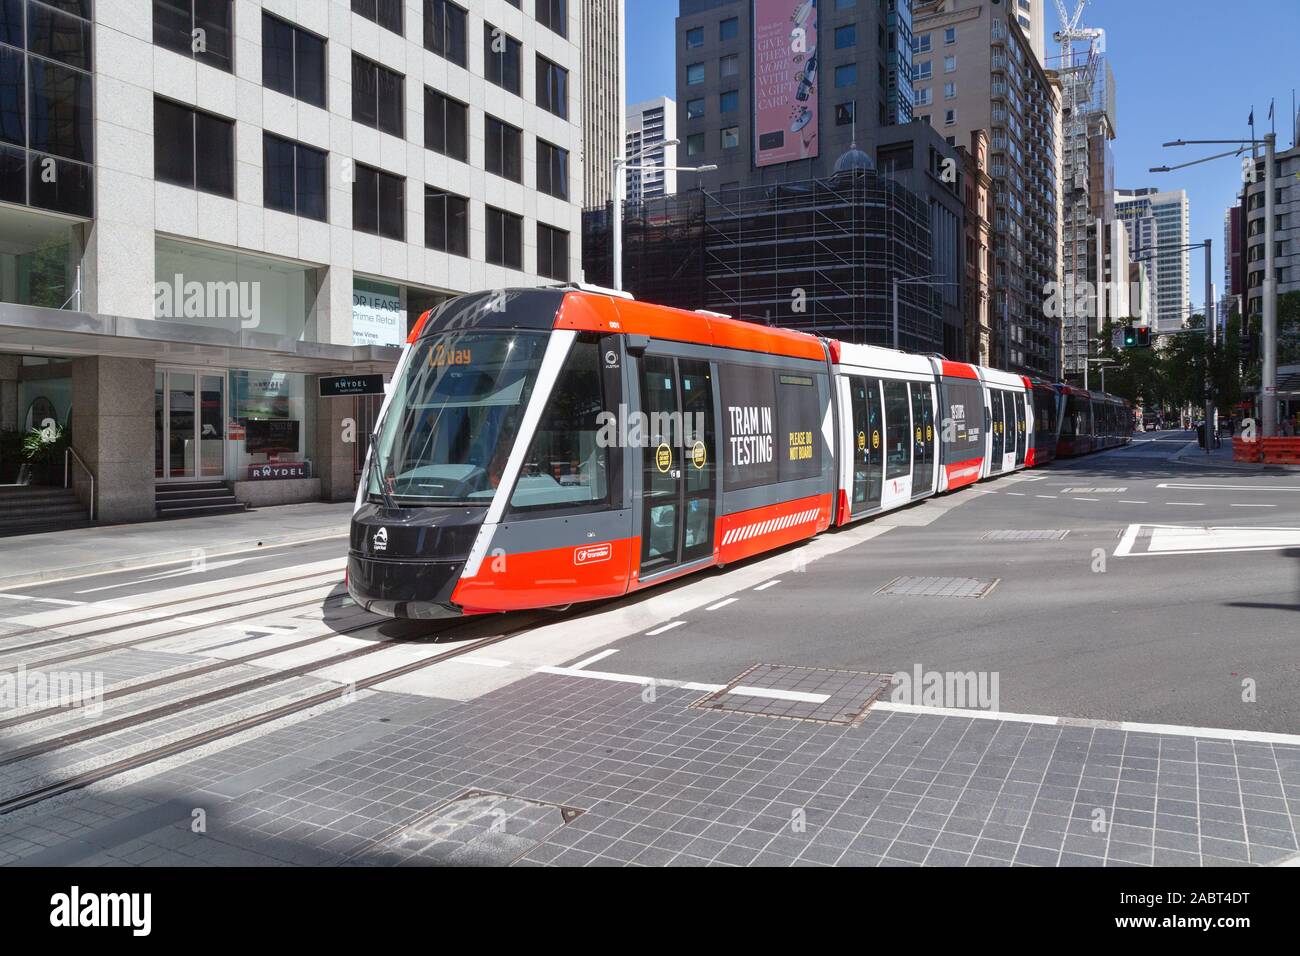 Sydney tram; Tram testing of new trams for Light Rail Tram public transport system, Sydney Australia Stock Photo